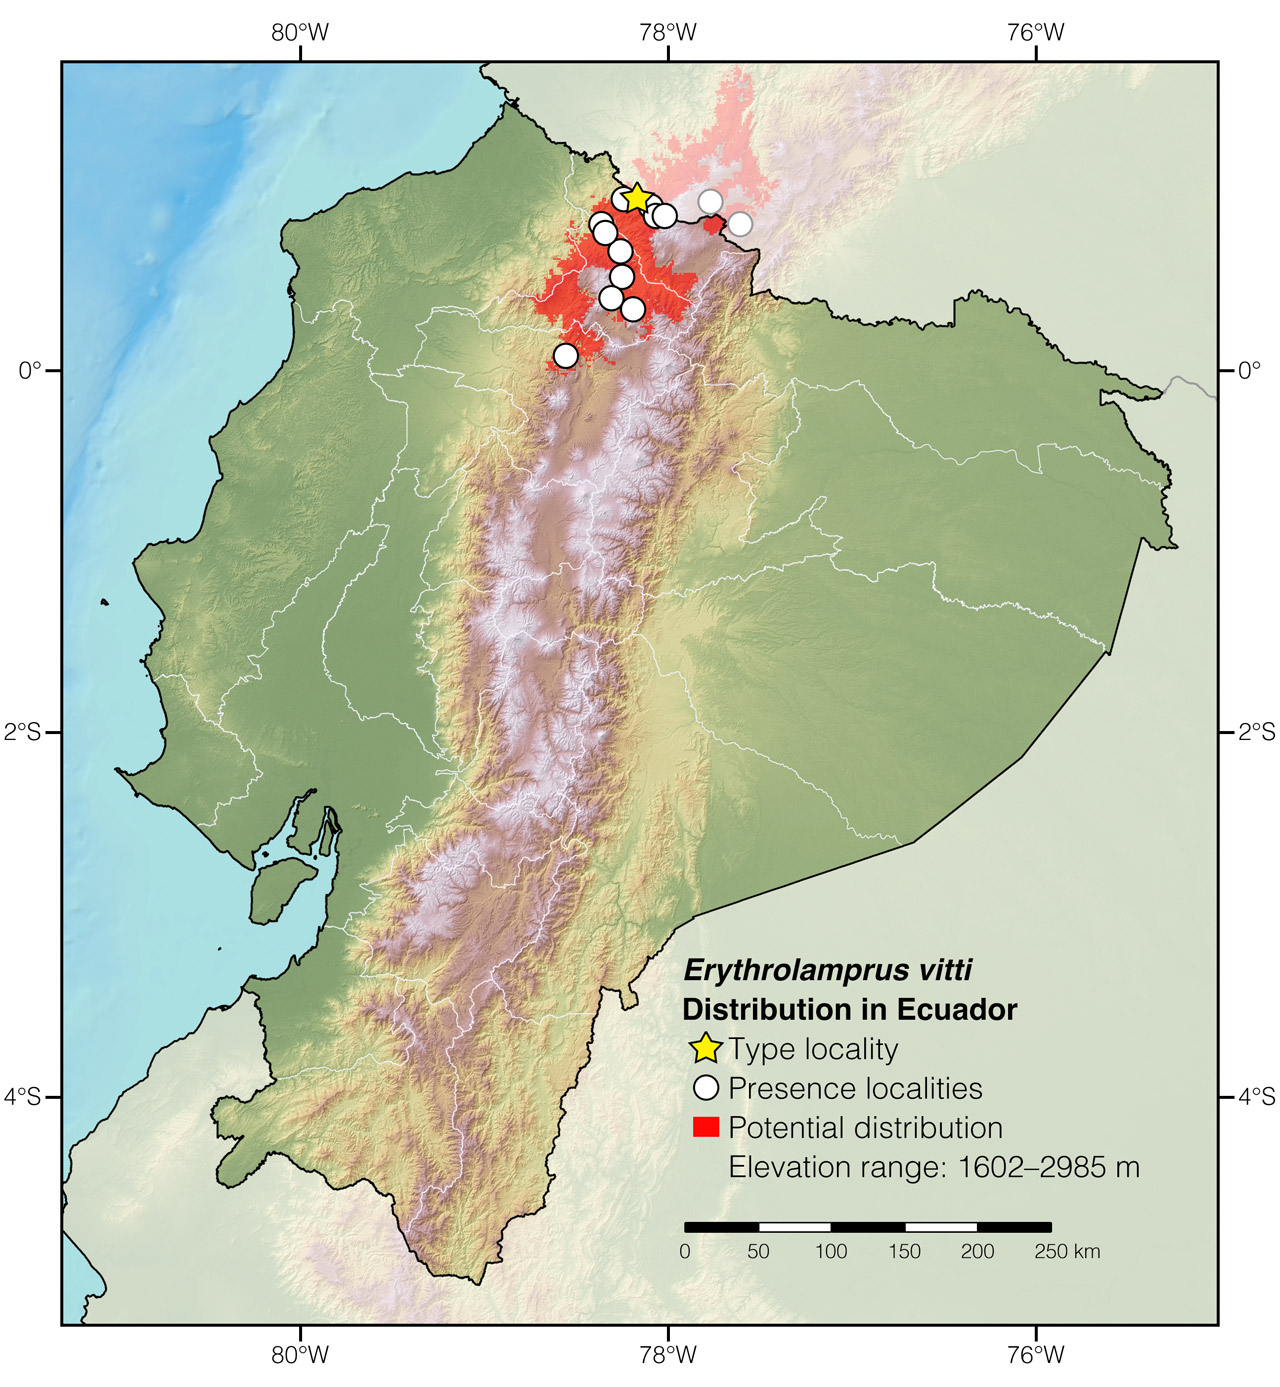 Distribution of Erythrolamprus vitti in Ecuador